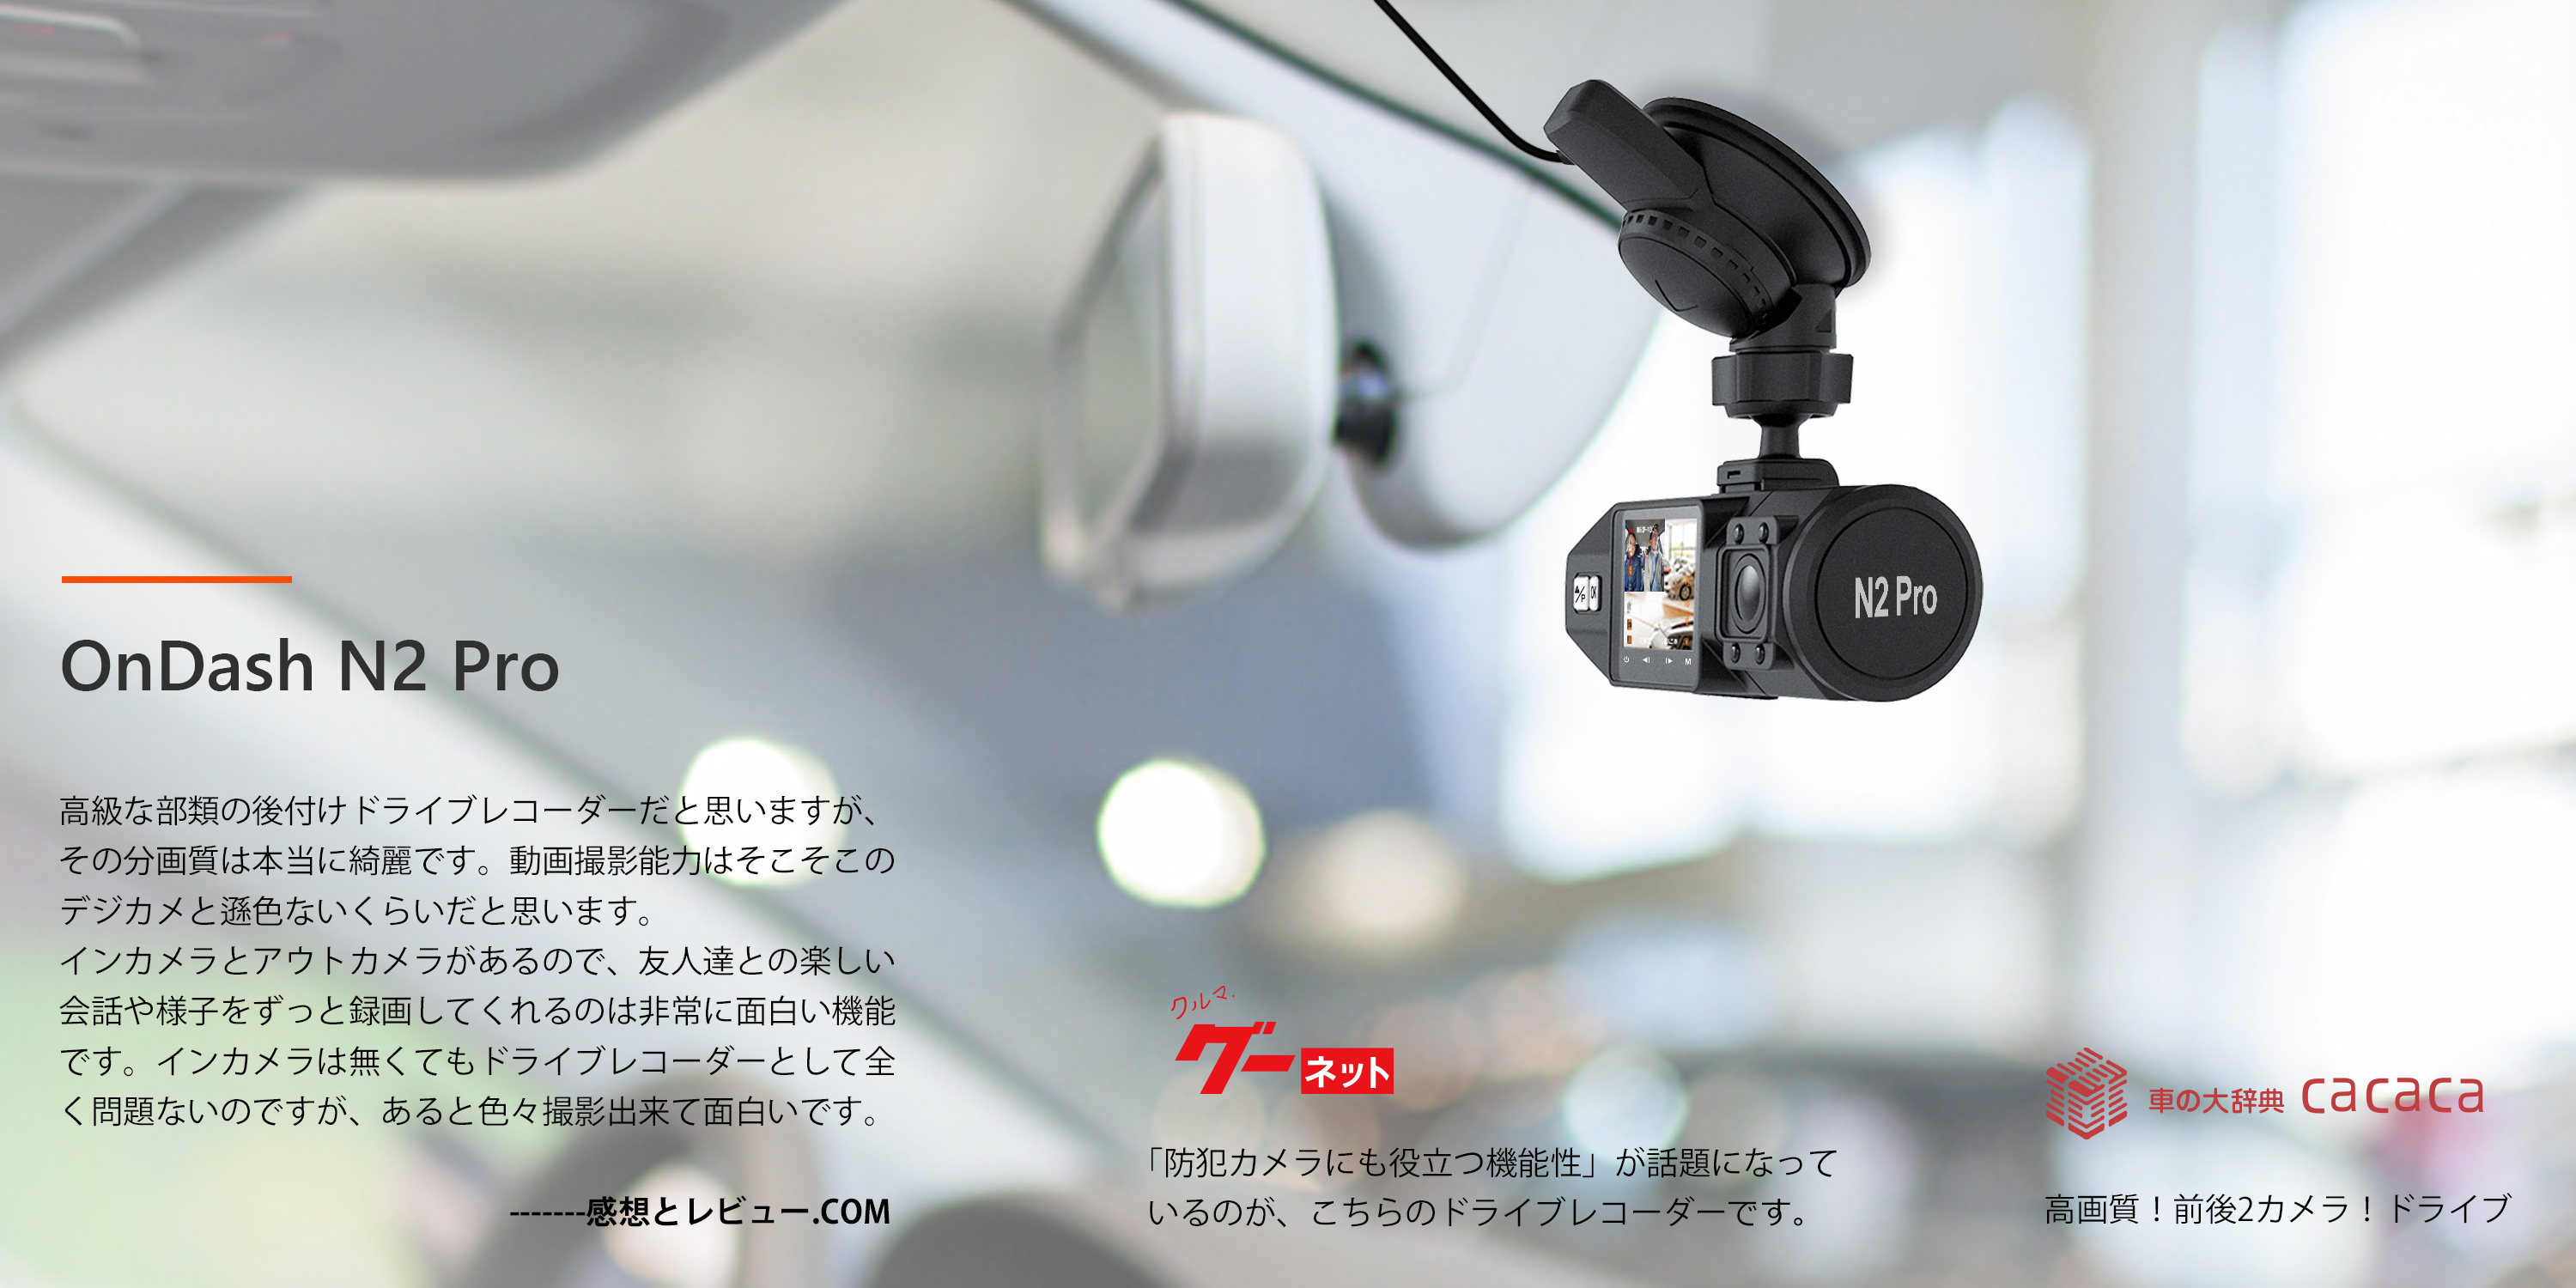 Vantrue 車内と車外同時録画できるドライブレコーダーvantrue N2proが5000円オフ 0台限定 お早めにご注文ください Shenzhen Yidian Zhuoyue Technology Co Ltdのプレスリリース